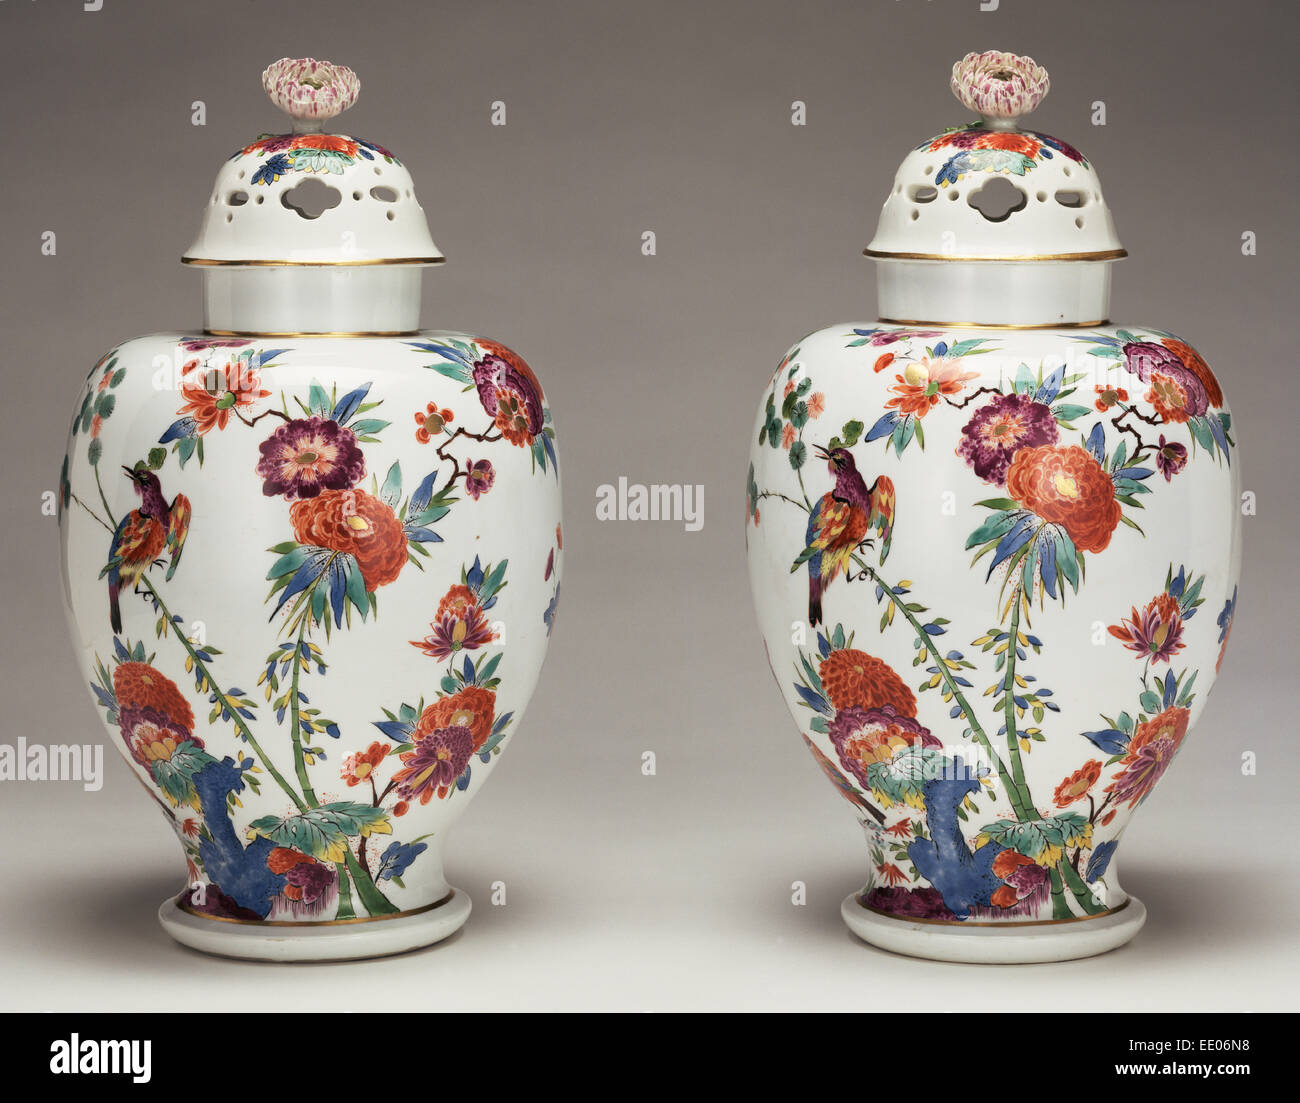 Pair of Lidded Vases; Meissen Porcelain Manufactory, German, active 1710 - present; Meissen, Germany, Europe; before 1733 Stock Photo